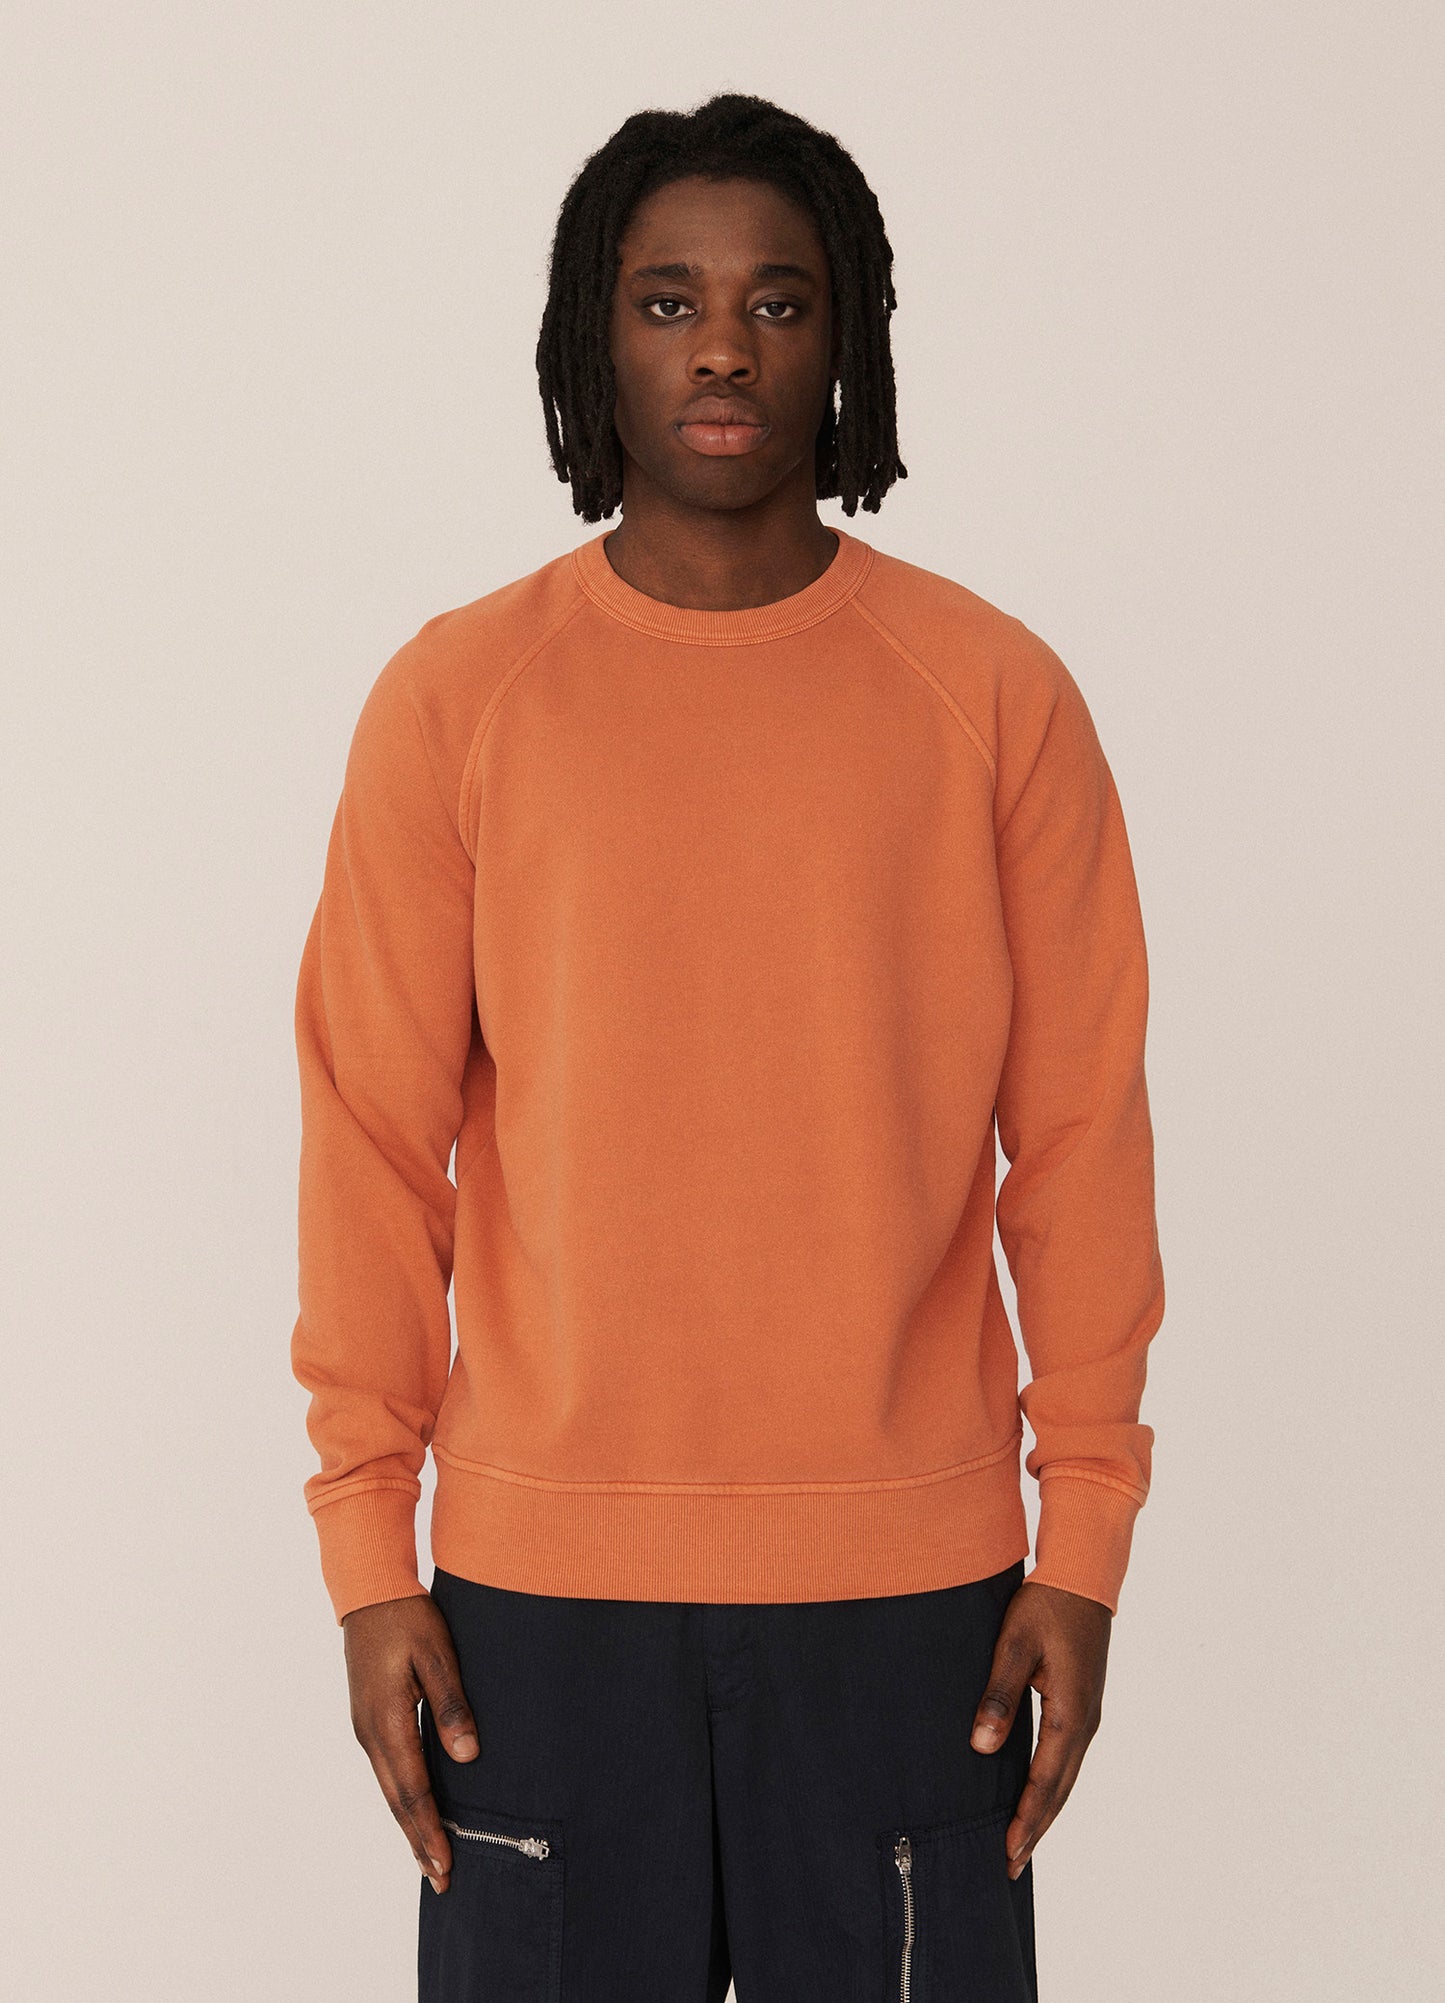 
                  
                    Shrank Sweatshirt - Orange
                  
                